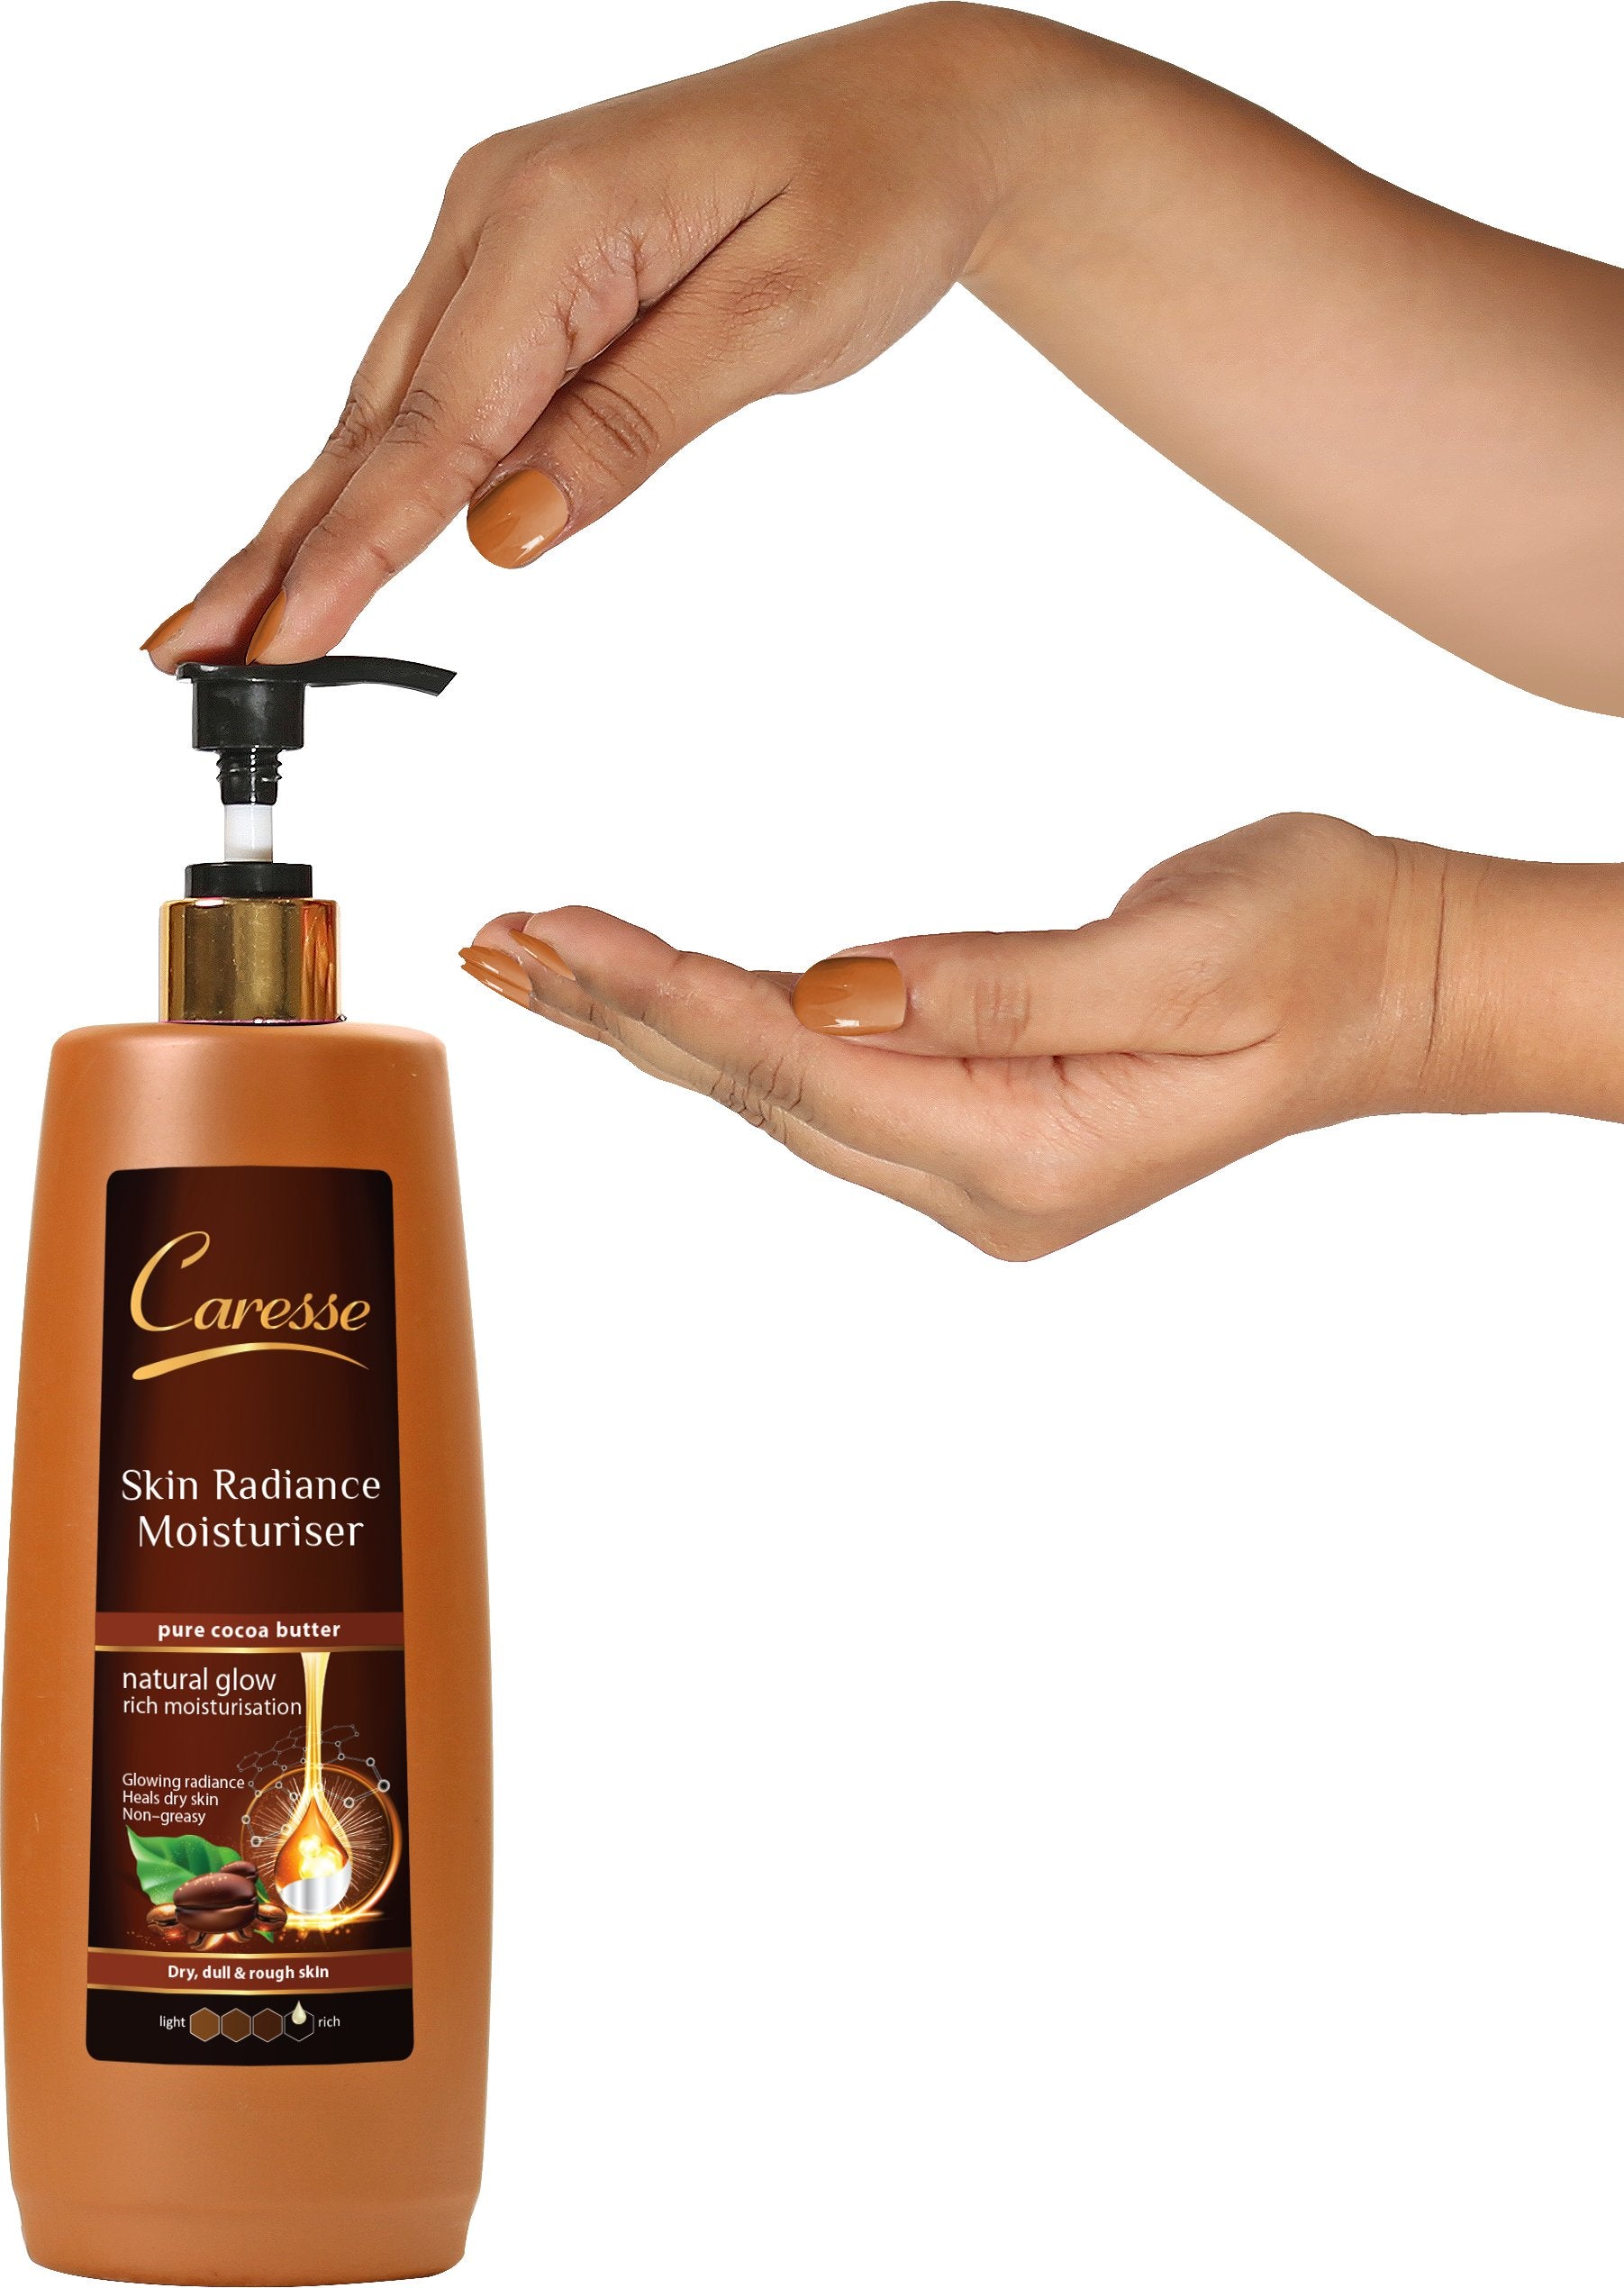 Best Caresse Skin Radiance Moisturiser Online In Pakistan - Moisturizing Lotion